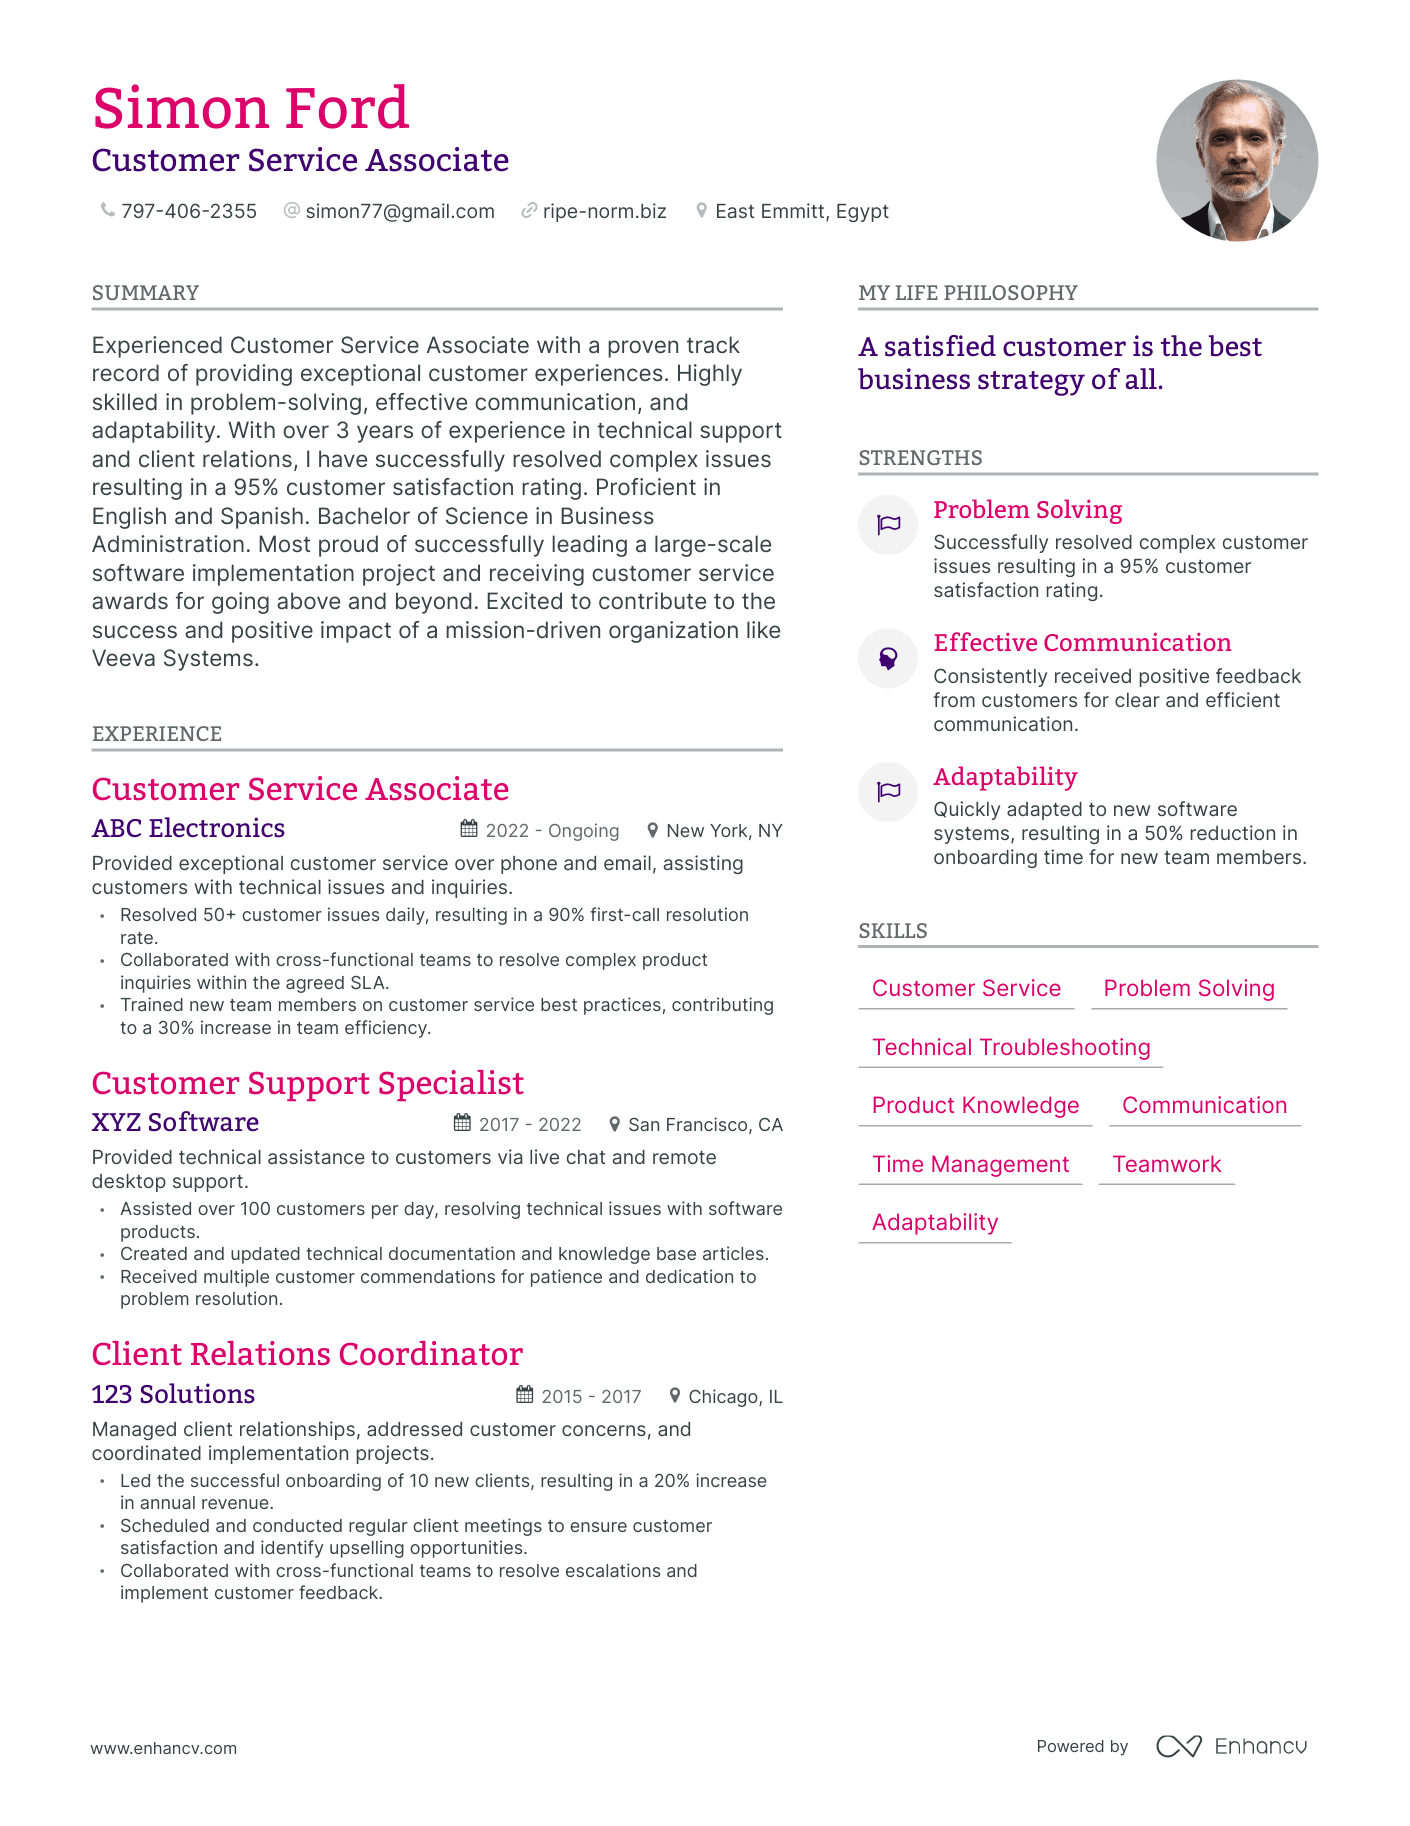 Customer Service Associate resume example